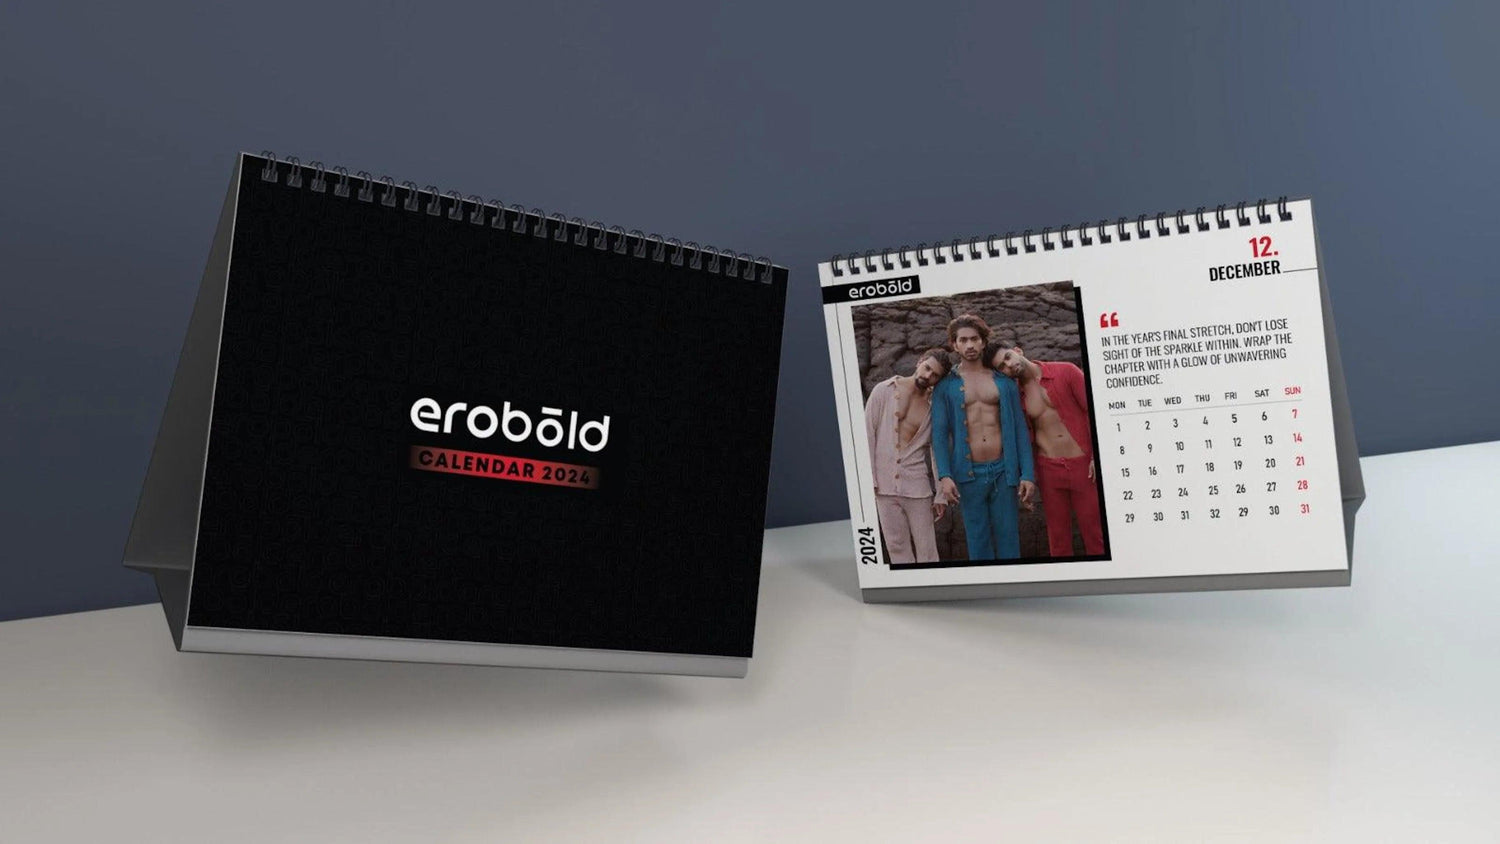 Erobold Fashion Calendar Merchandise Year 2024 - Bold Men Calendar